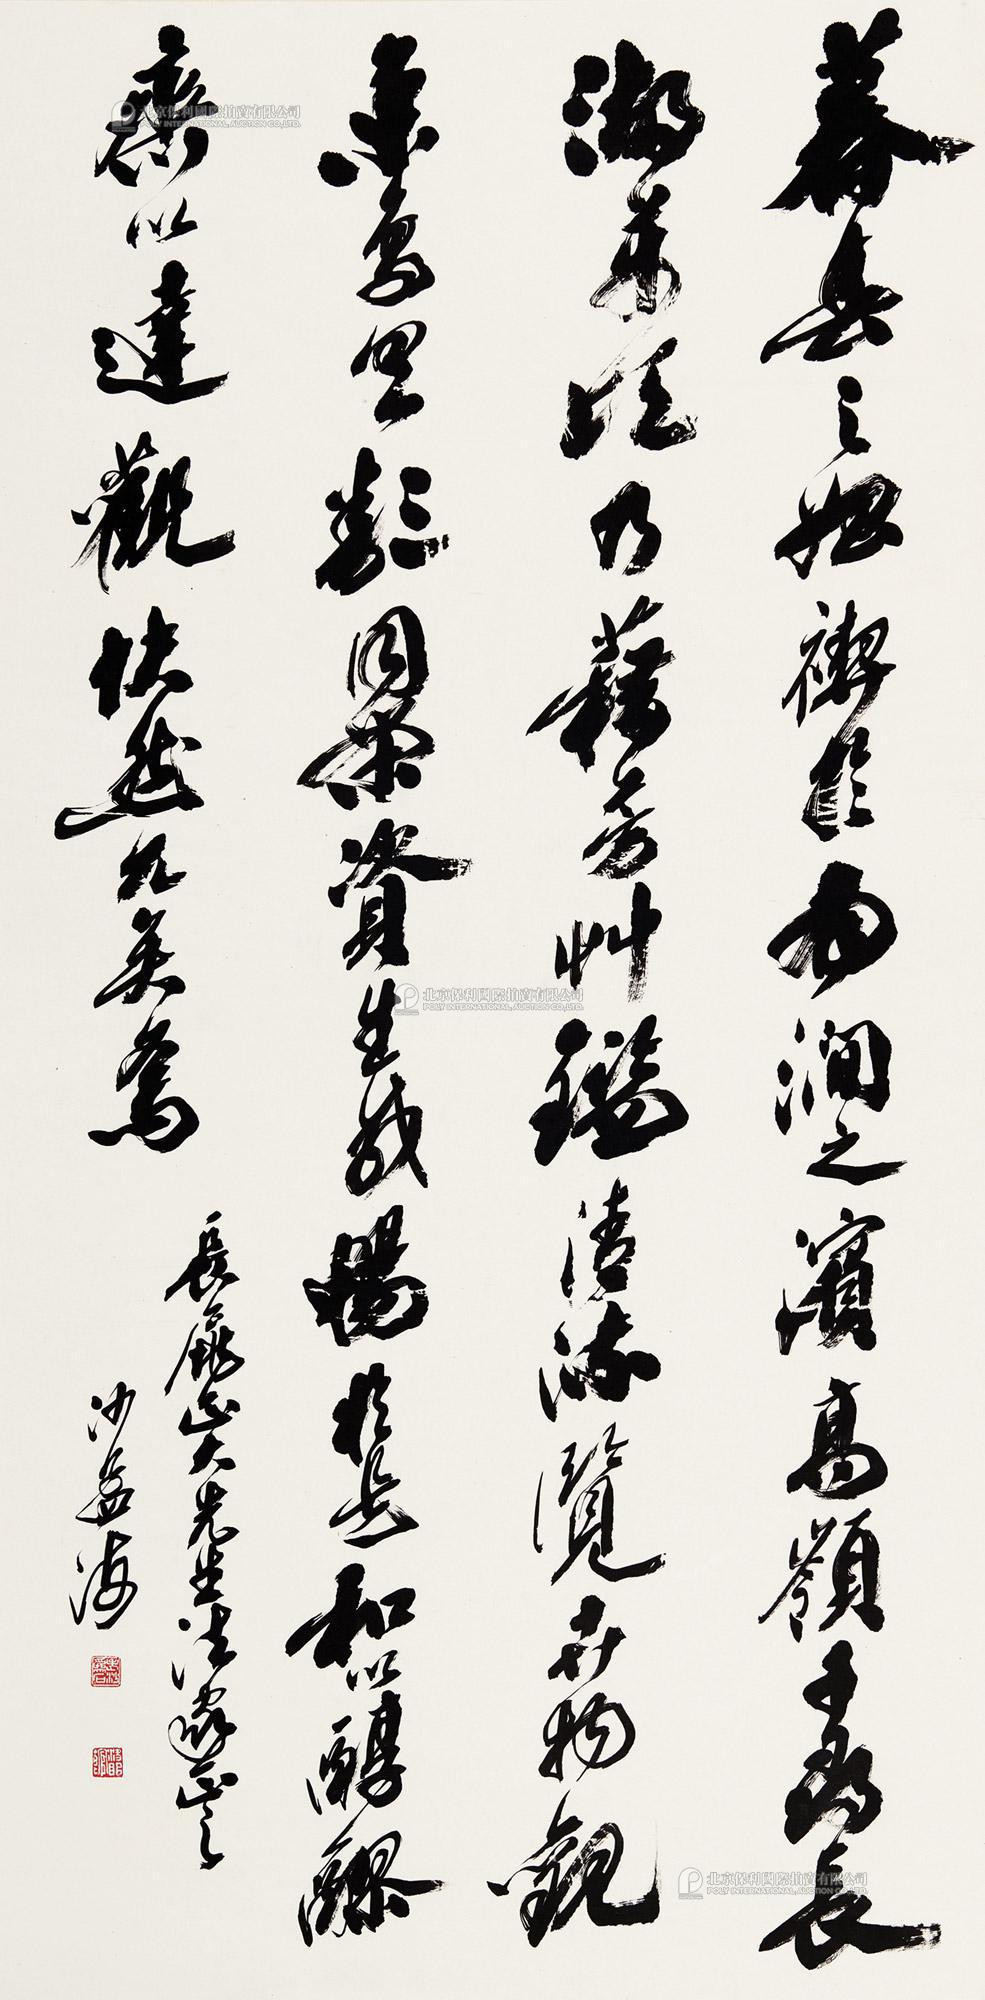 Calligraphic Poem of Lan Ting Hou Xu in Cursive Script